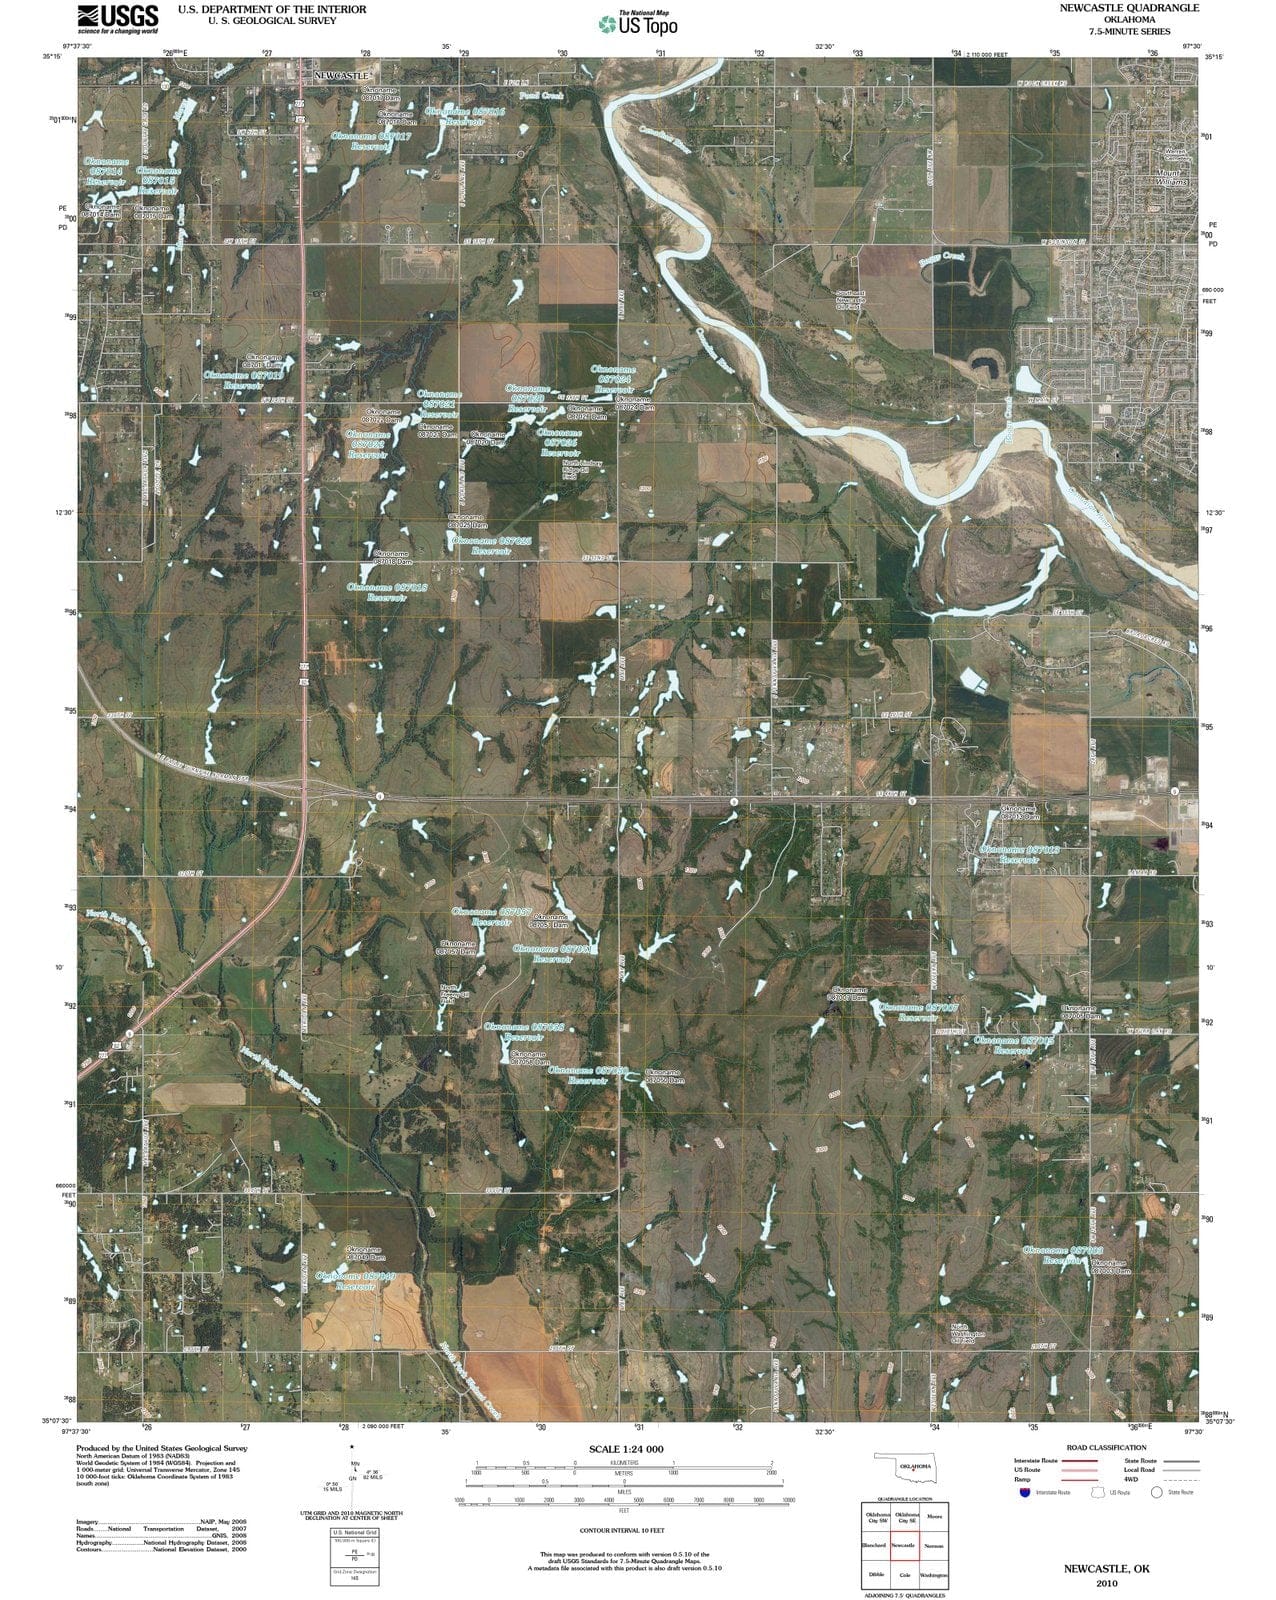 2010 Newcastle, OK - Oklahoma - USGS Topographic Map